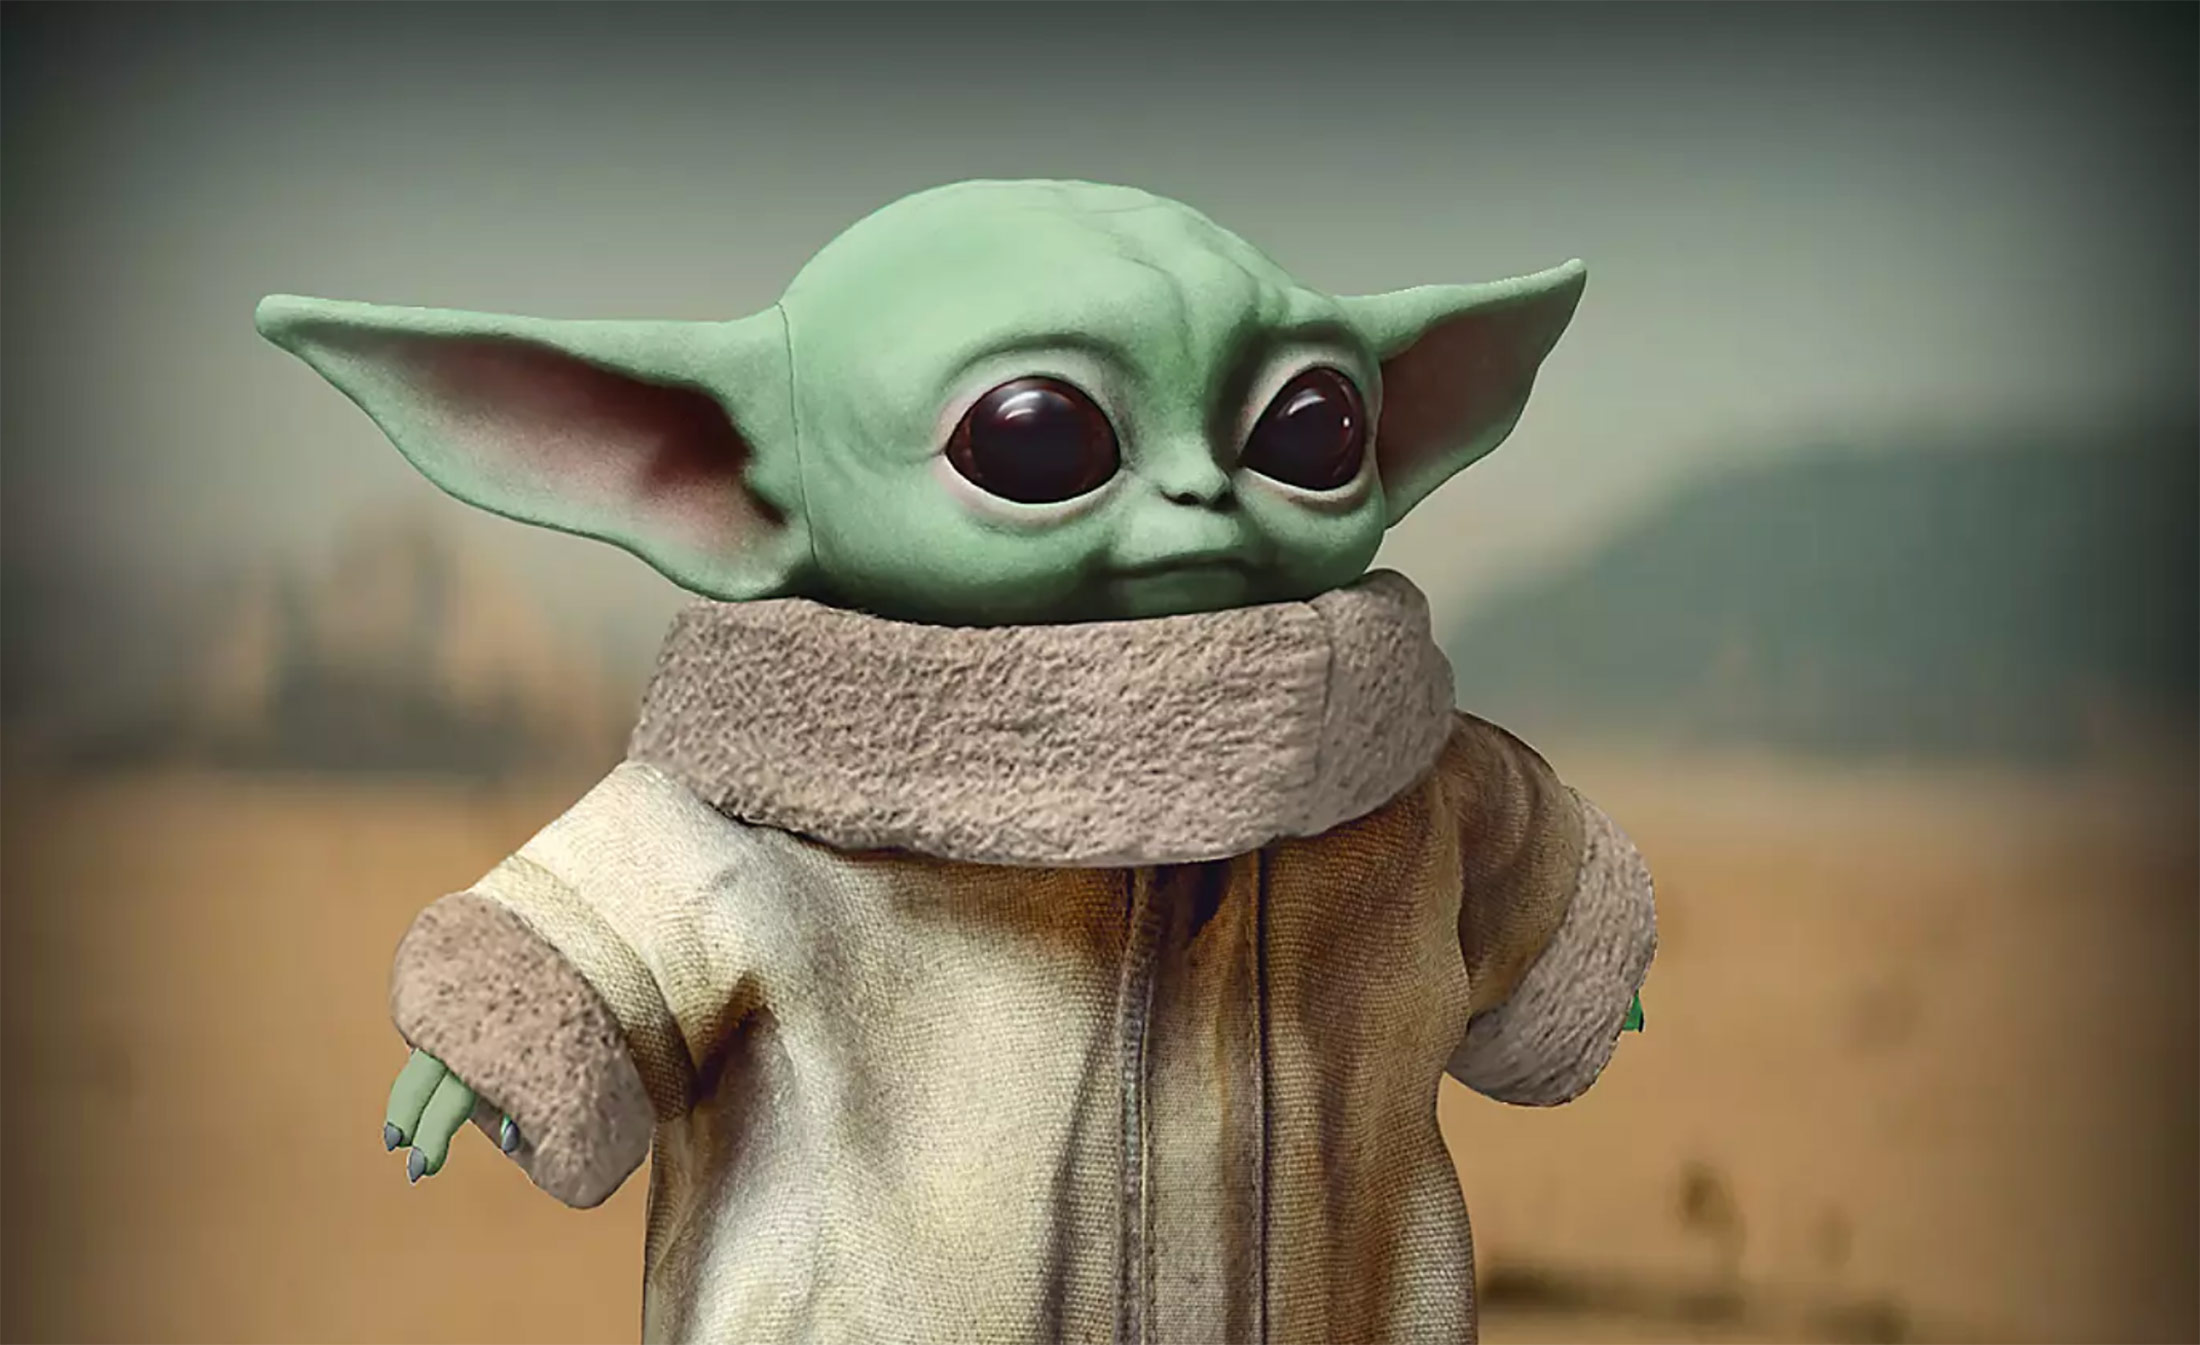 rib Machtigen kant Star Wars' Fans Must Wait Until 2020 for Baby Yoda Dolls - Bloomberg